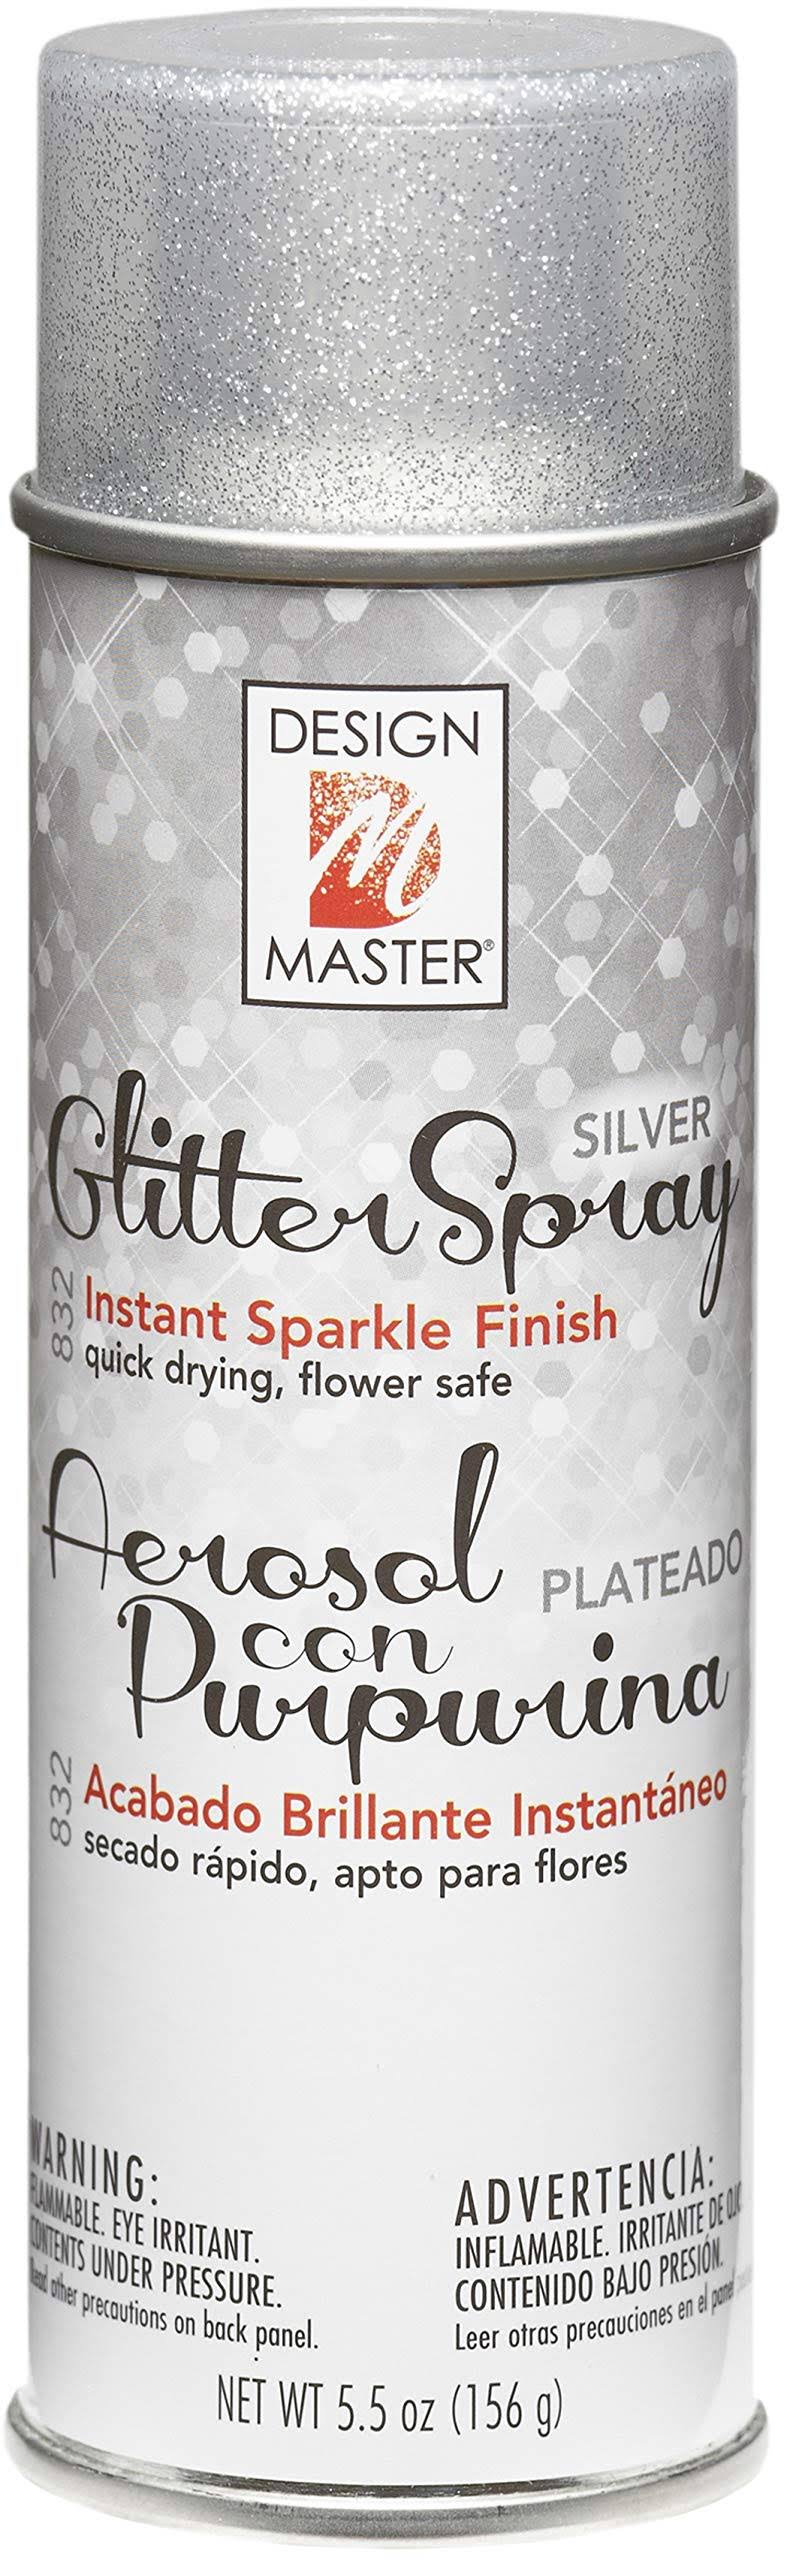 Design Master Glamourline Glitter Spray - Silver, 5.5oz